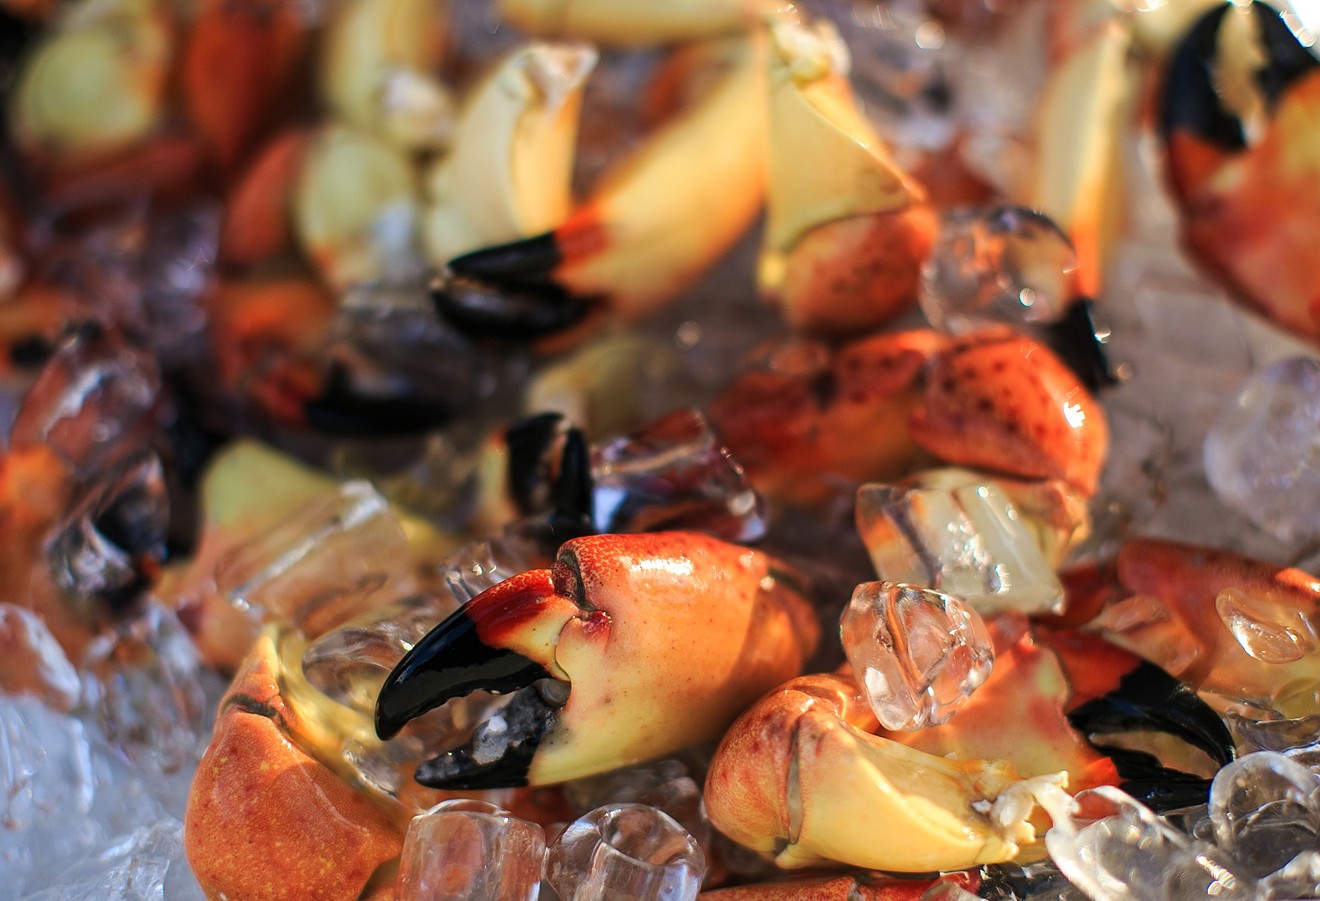 Stone crab season is upon us!